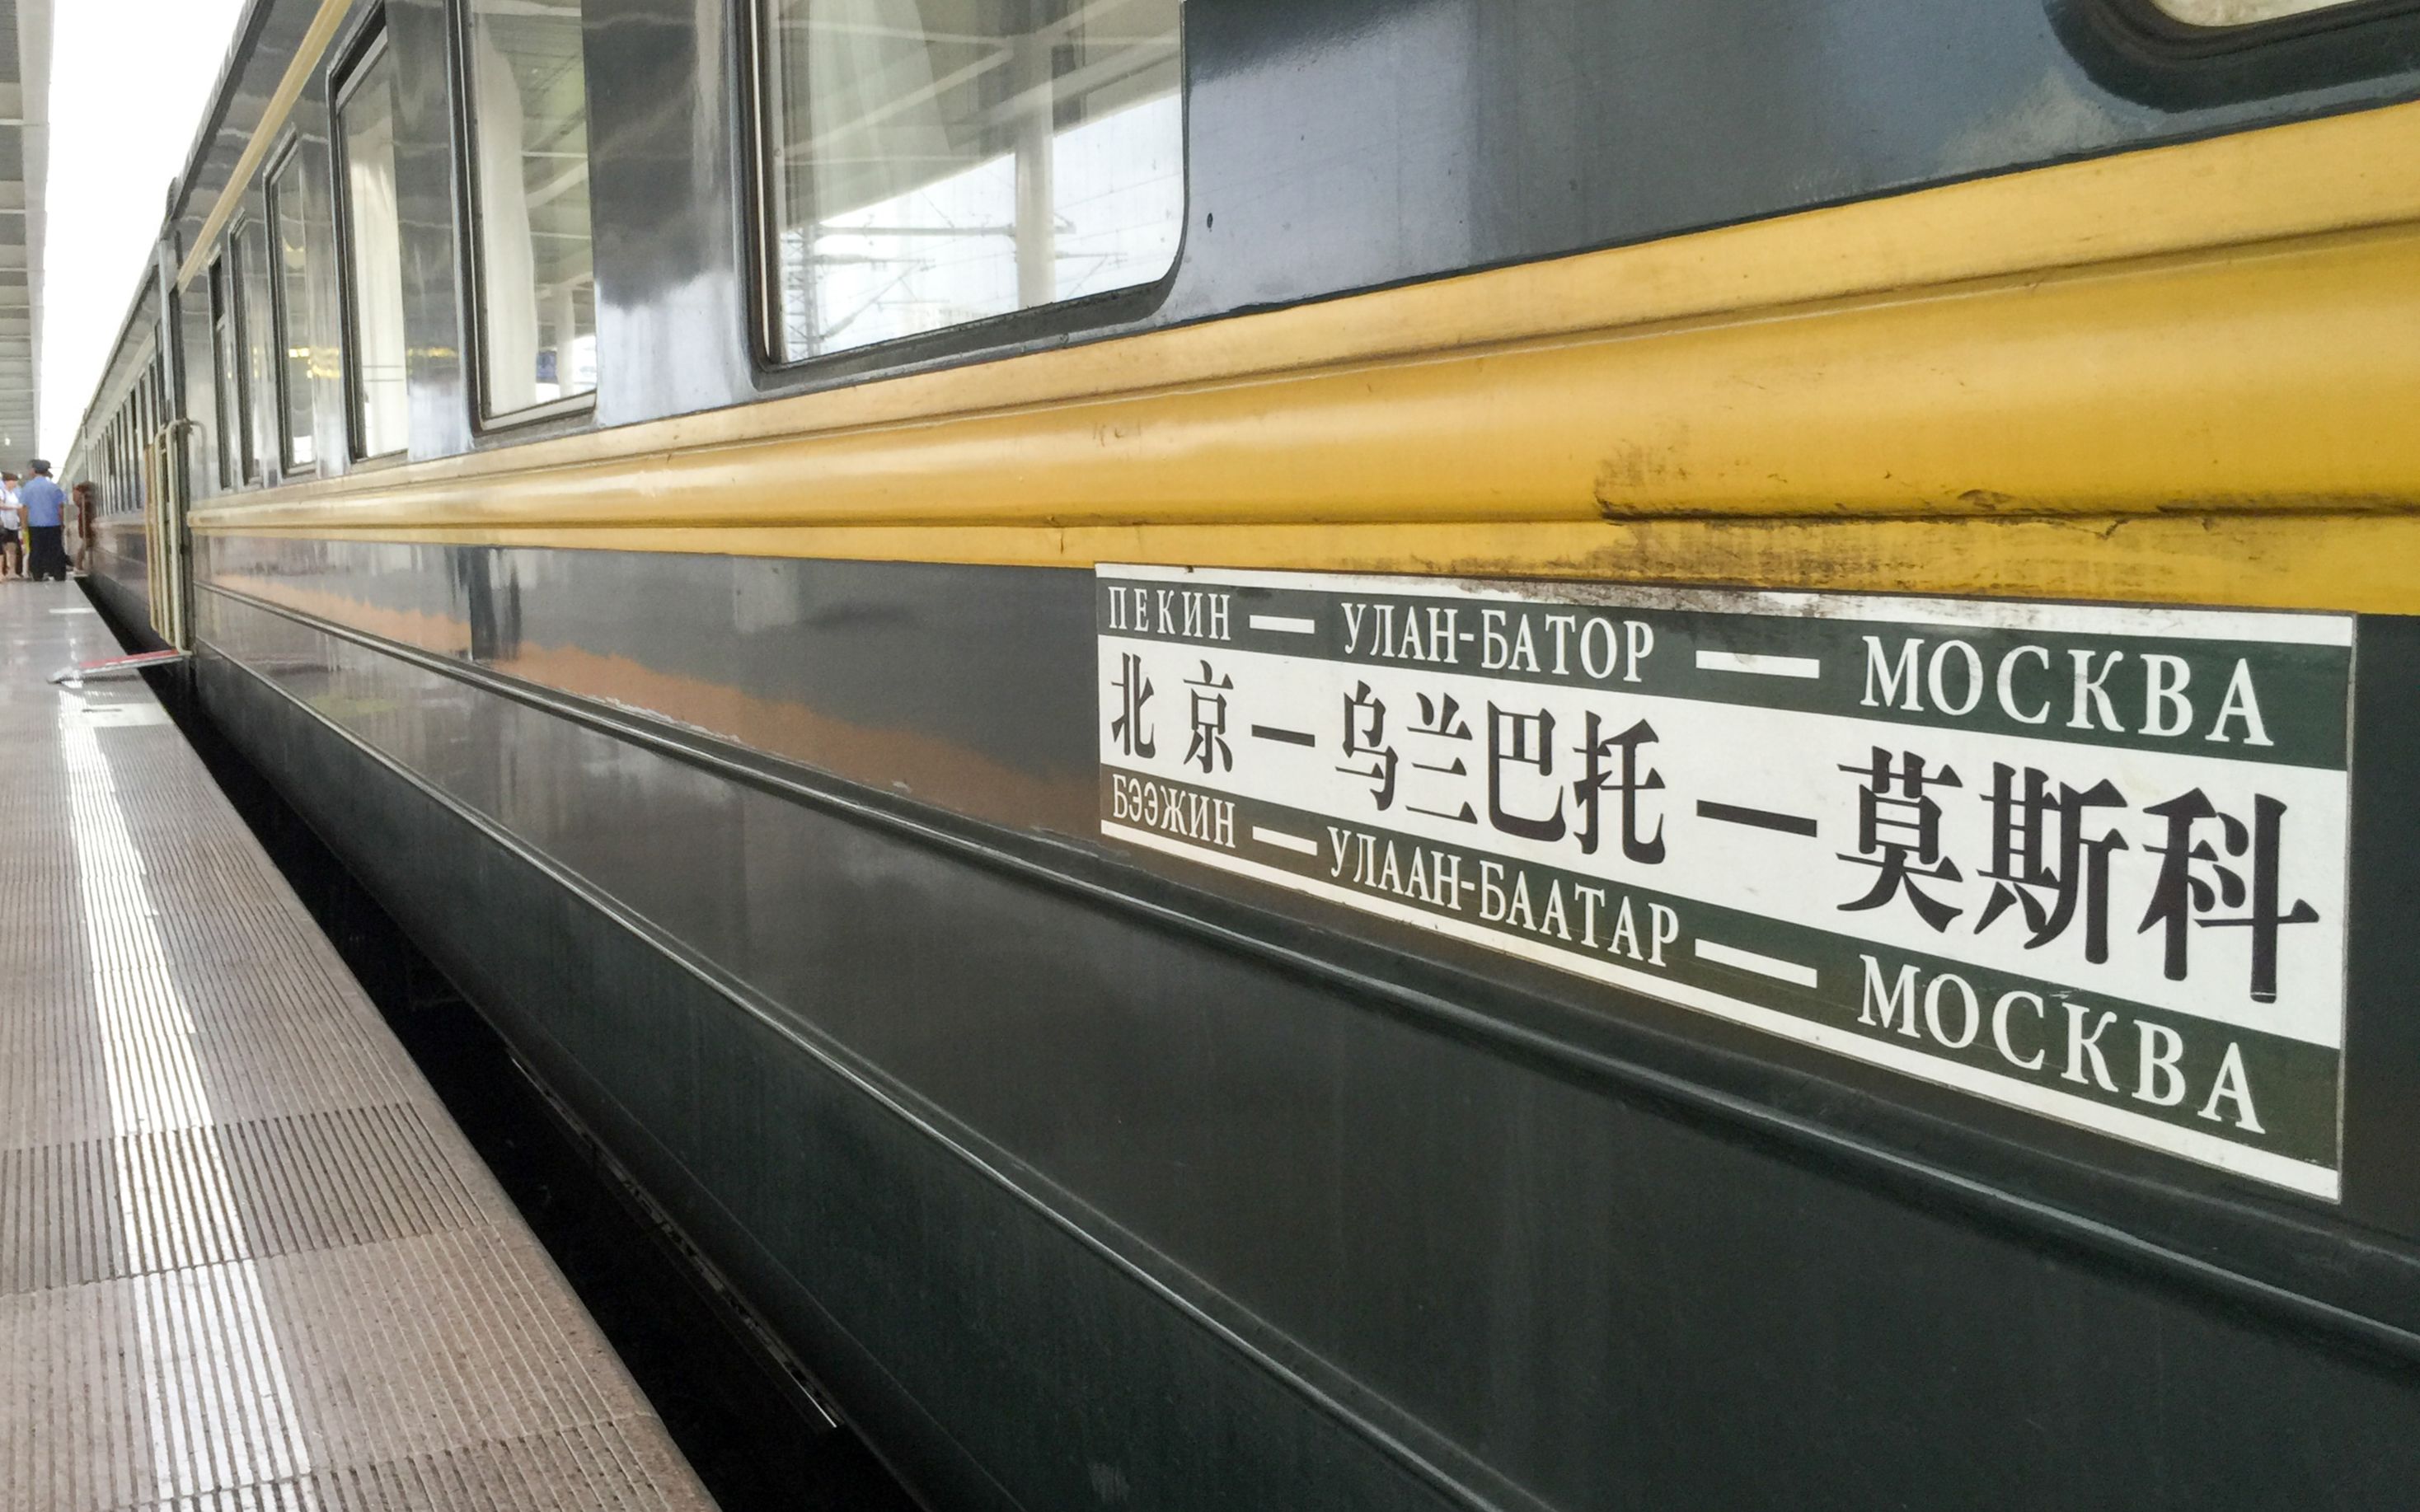 k3国际列车 路线图图片